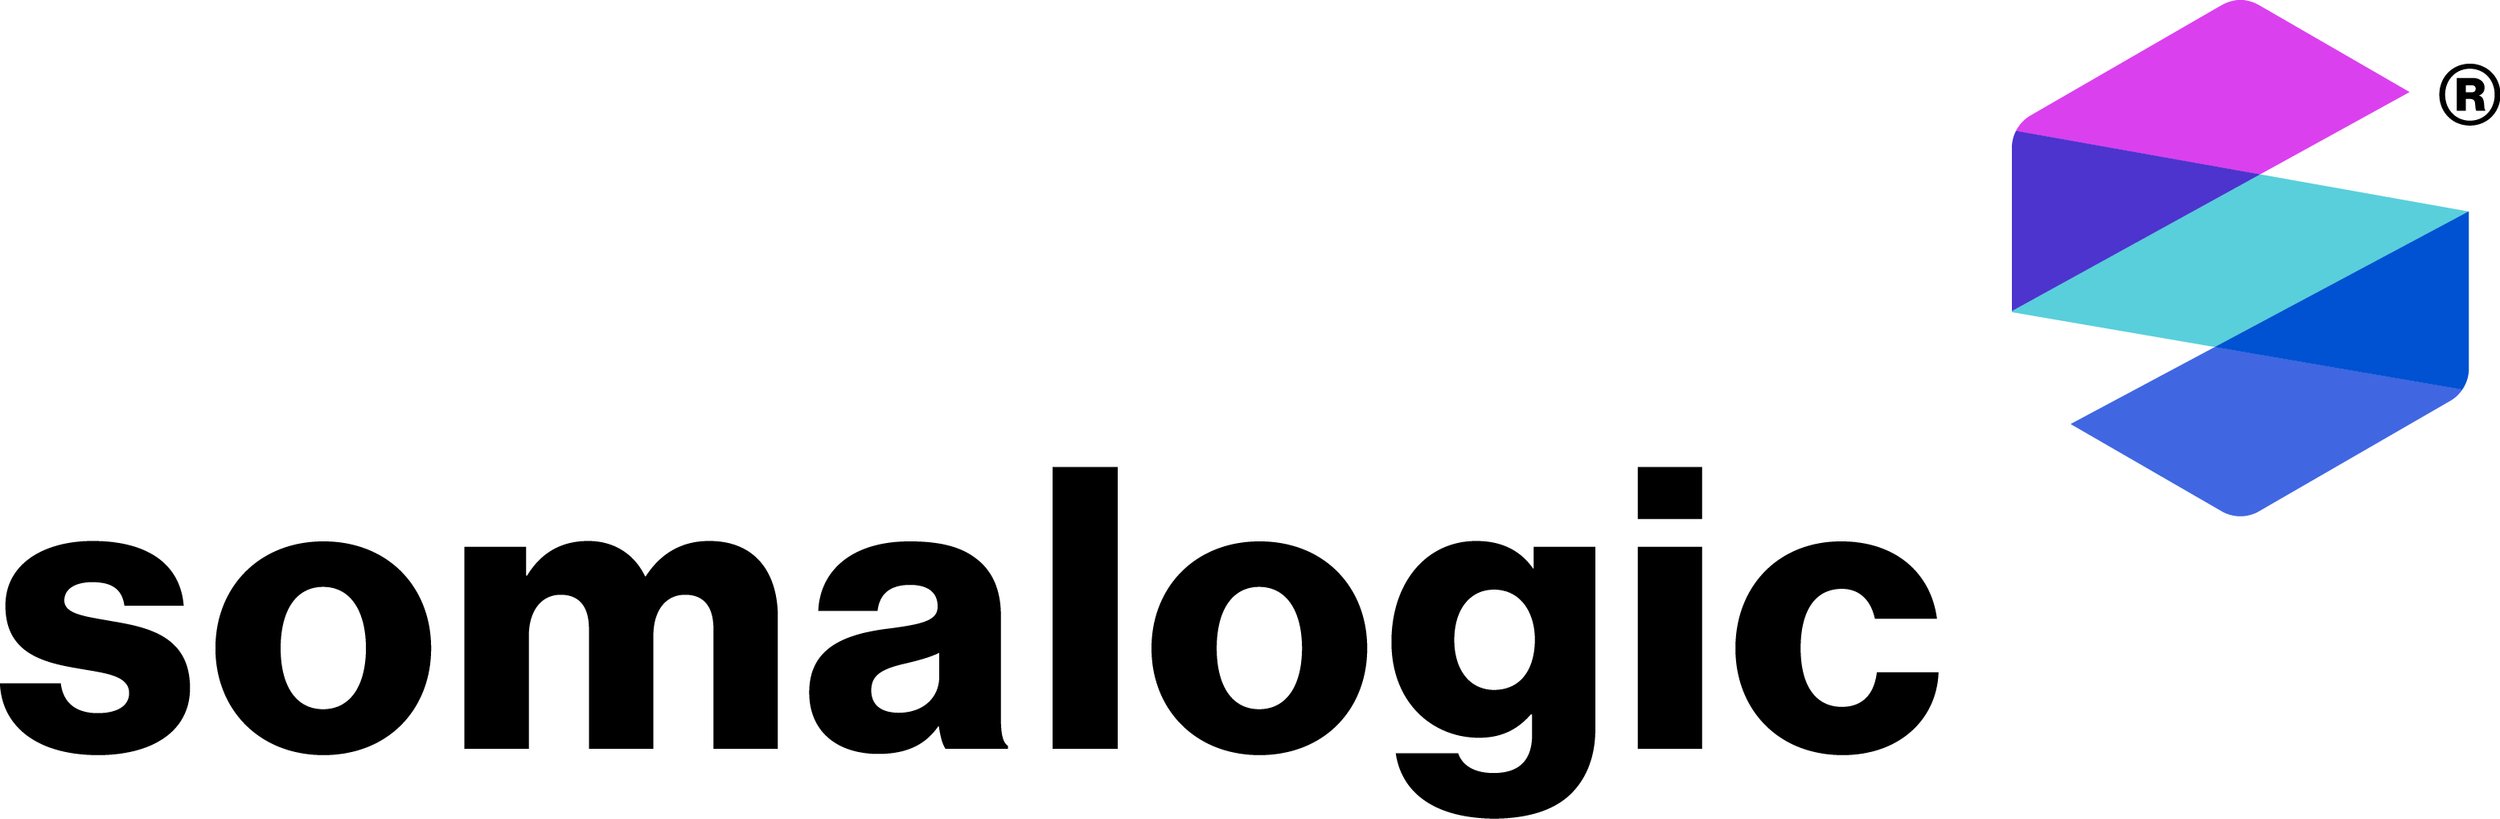 Somalogic-Logo-Horizontal_K_RGB_110520.jpg